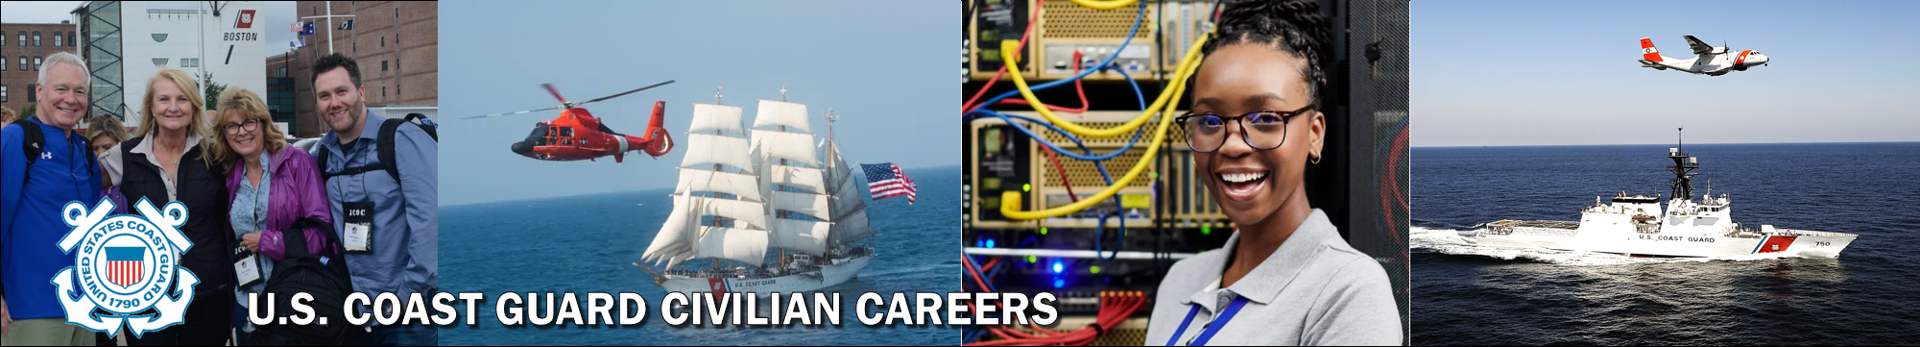 U.S. Coast Guard Civilian Careers